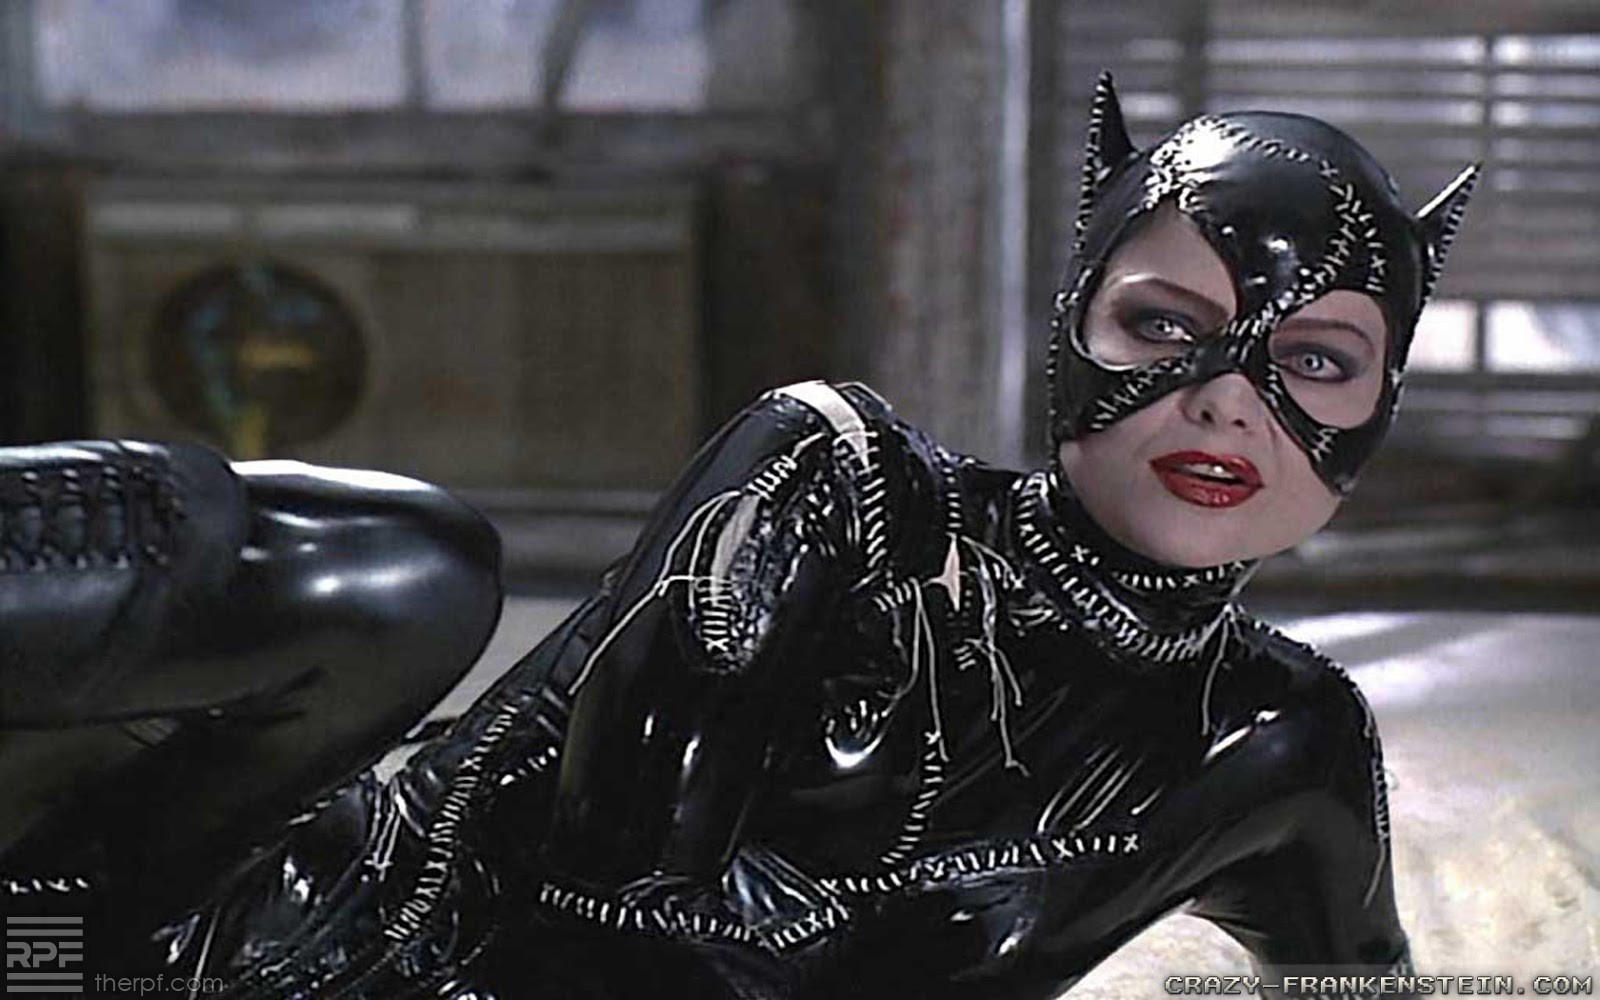 Catwoman (Batman returns)